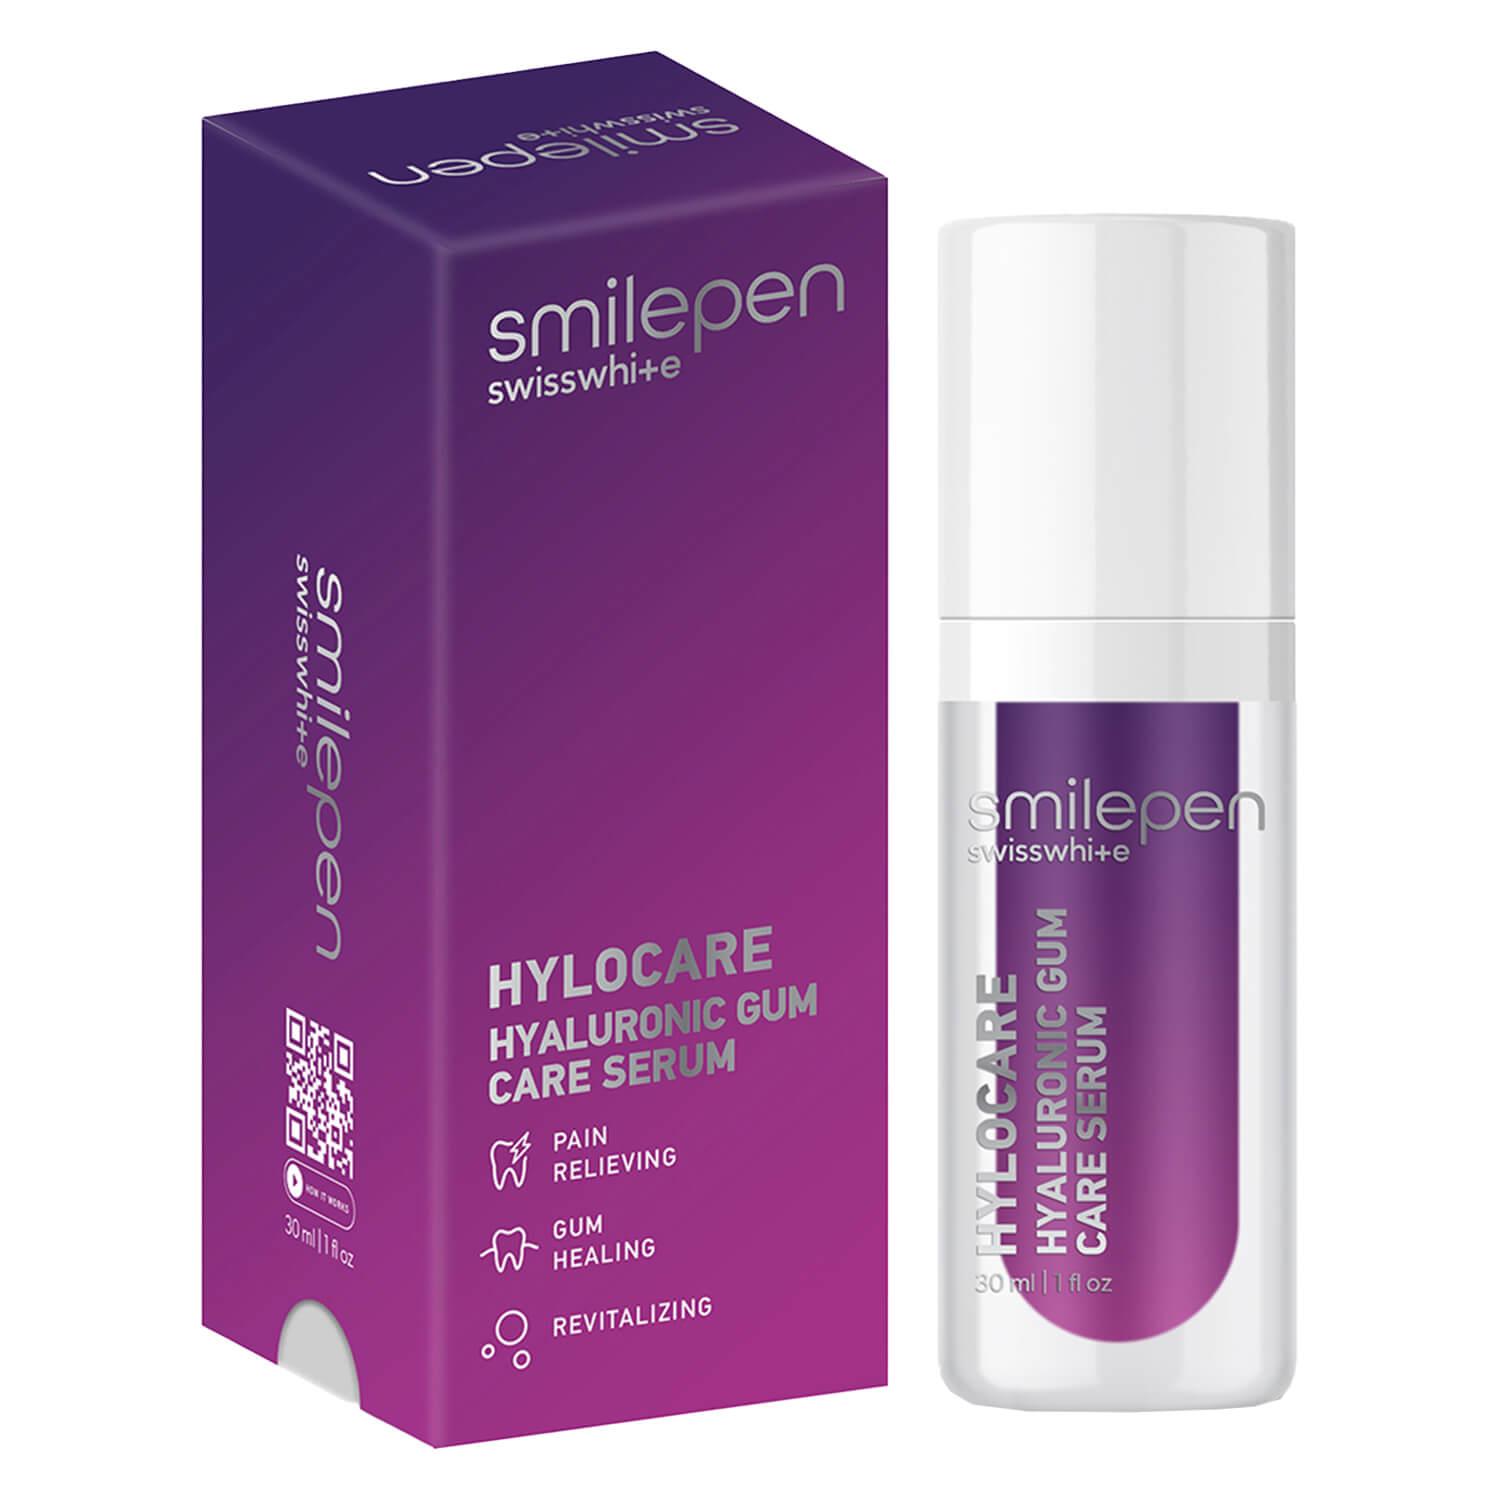 smilepen - Hyaluronic Gum Care Serum